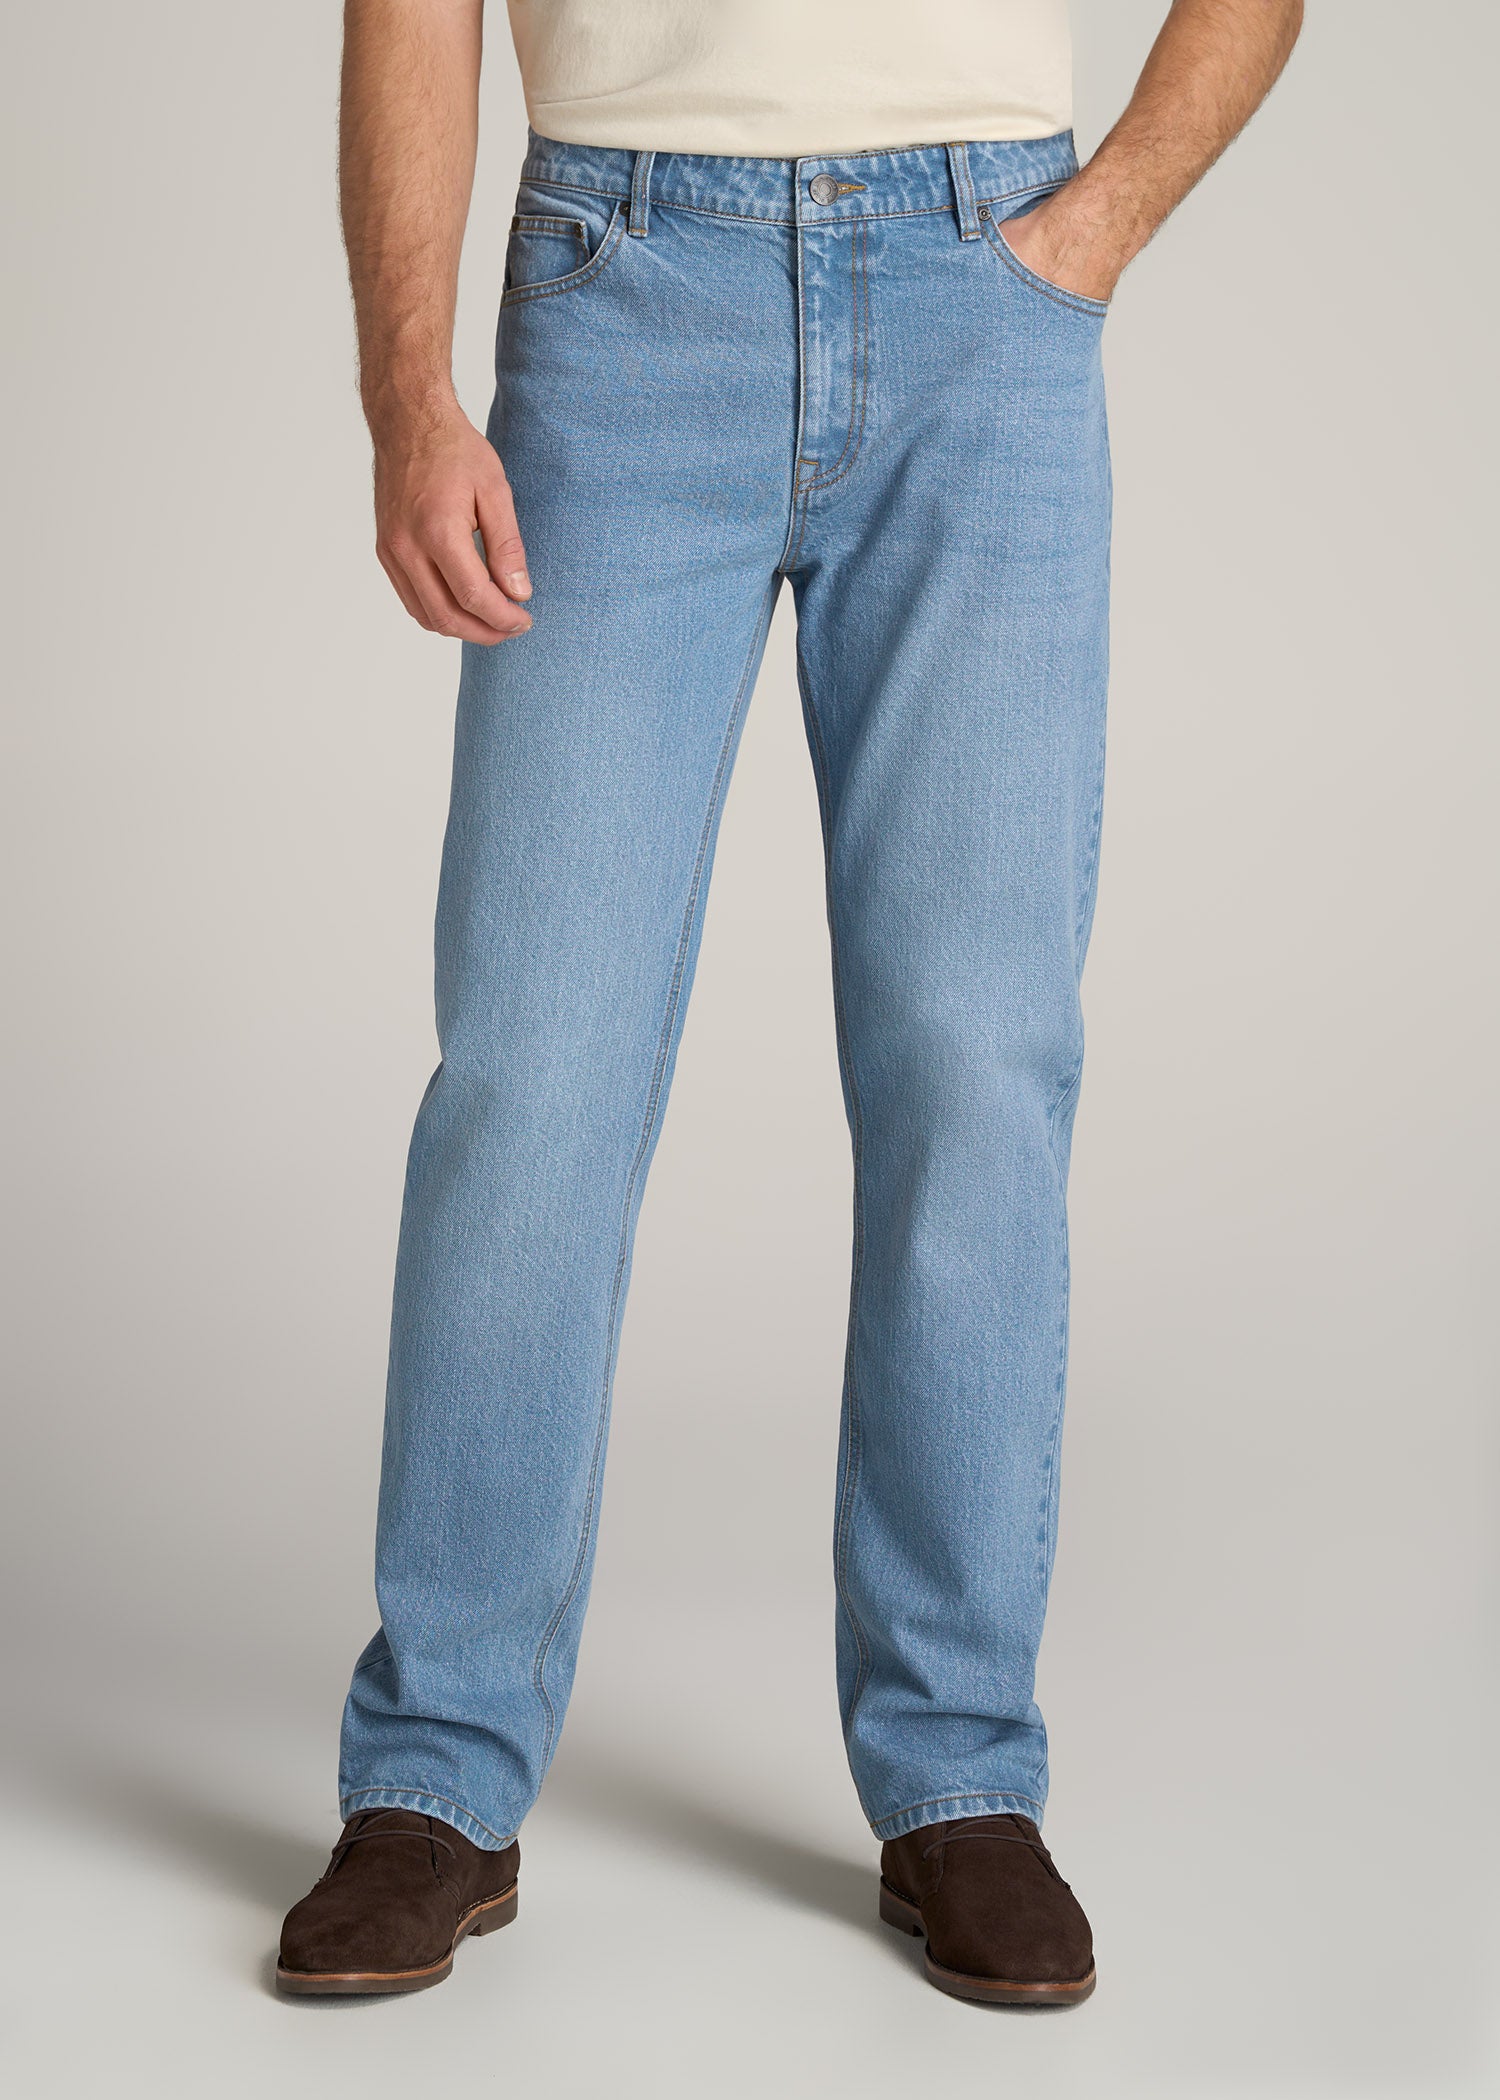 LJ&S Straight Leg Jeans for Tall Men | American Tall